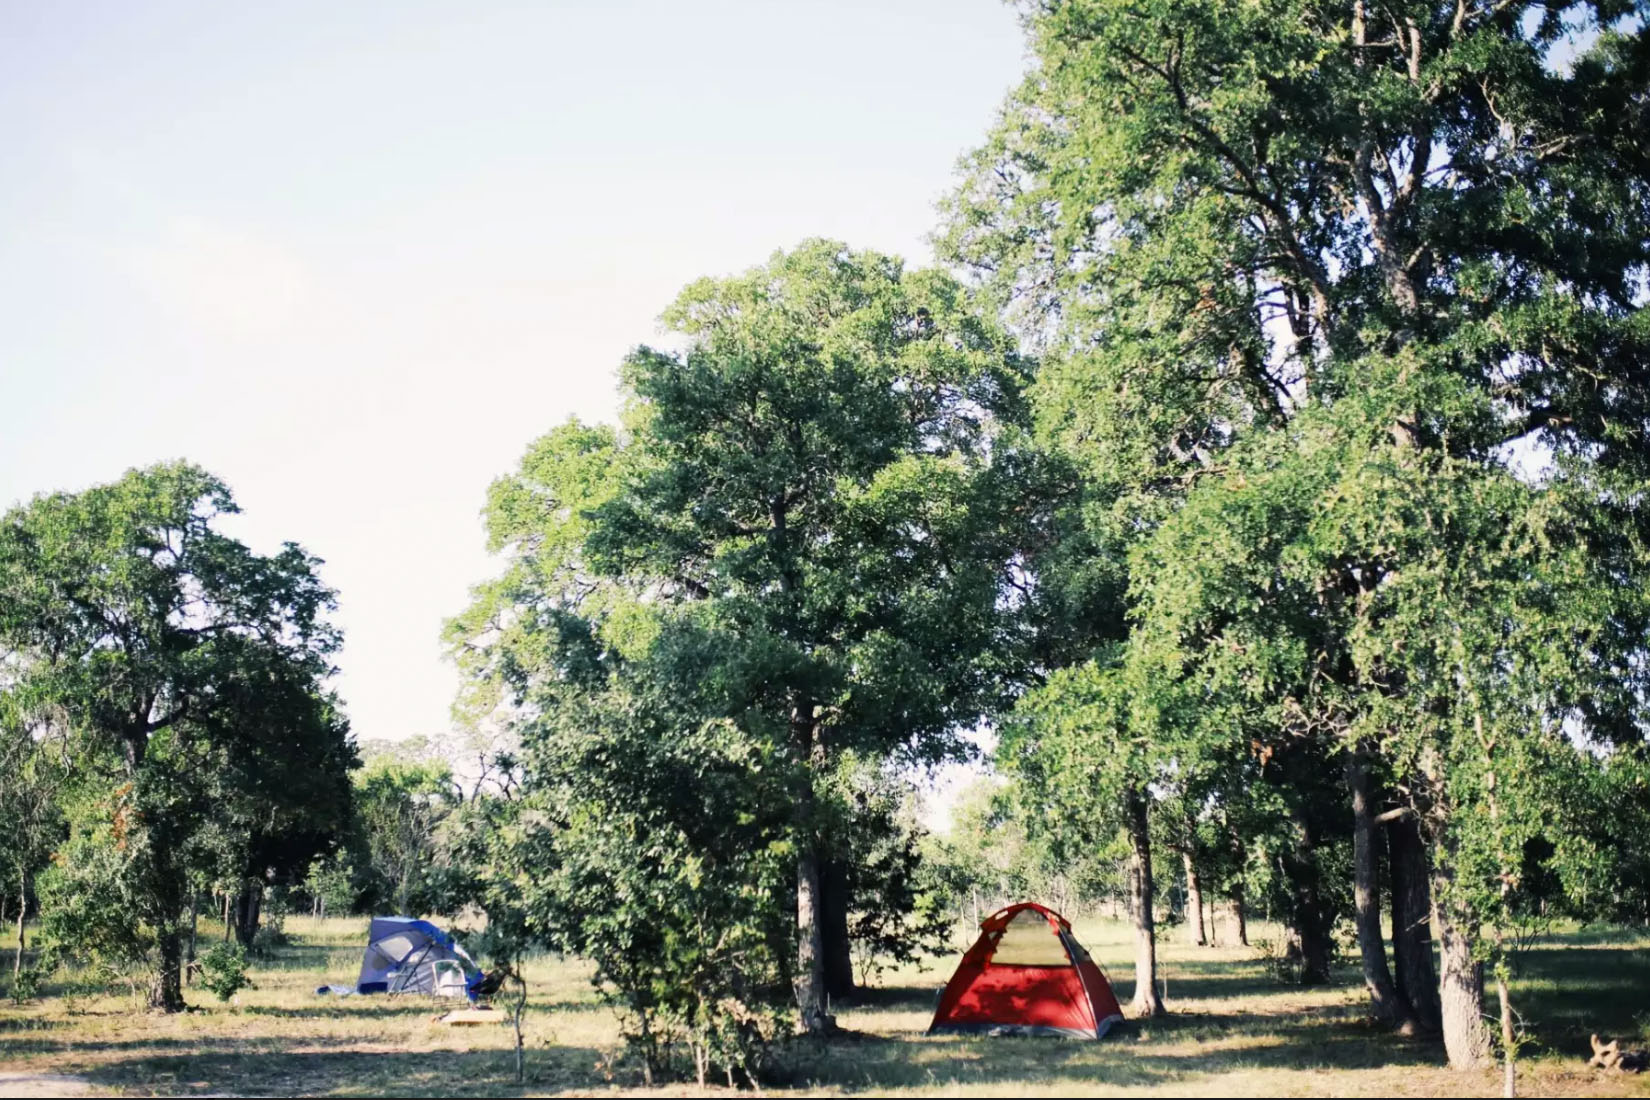 Al 's Hideaway tarjoaa edullista telttailua Texasissa 25 dollarilla's Hideaway offers low-cost camping in Texas for $25